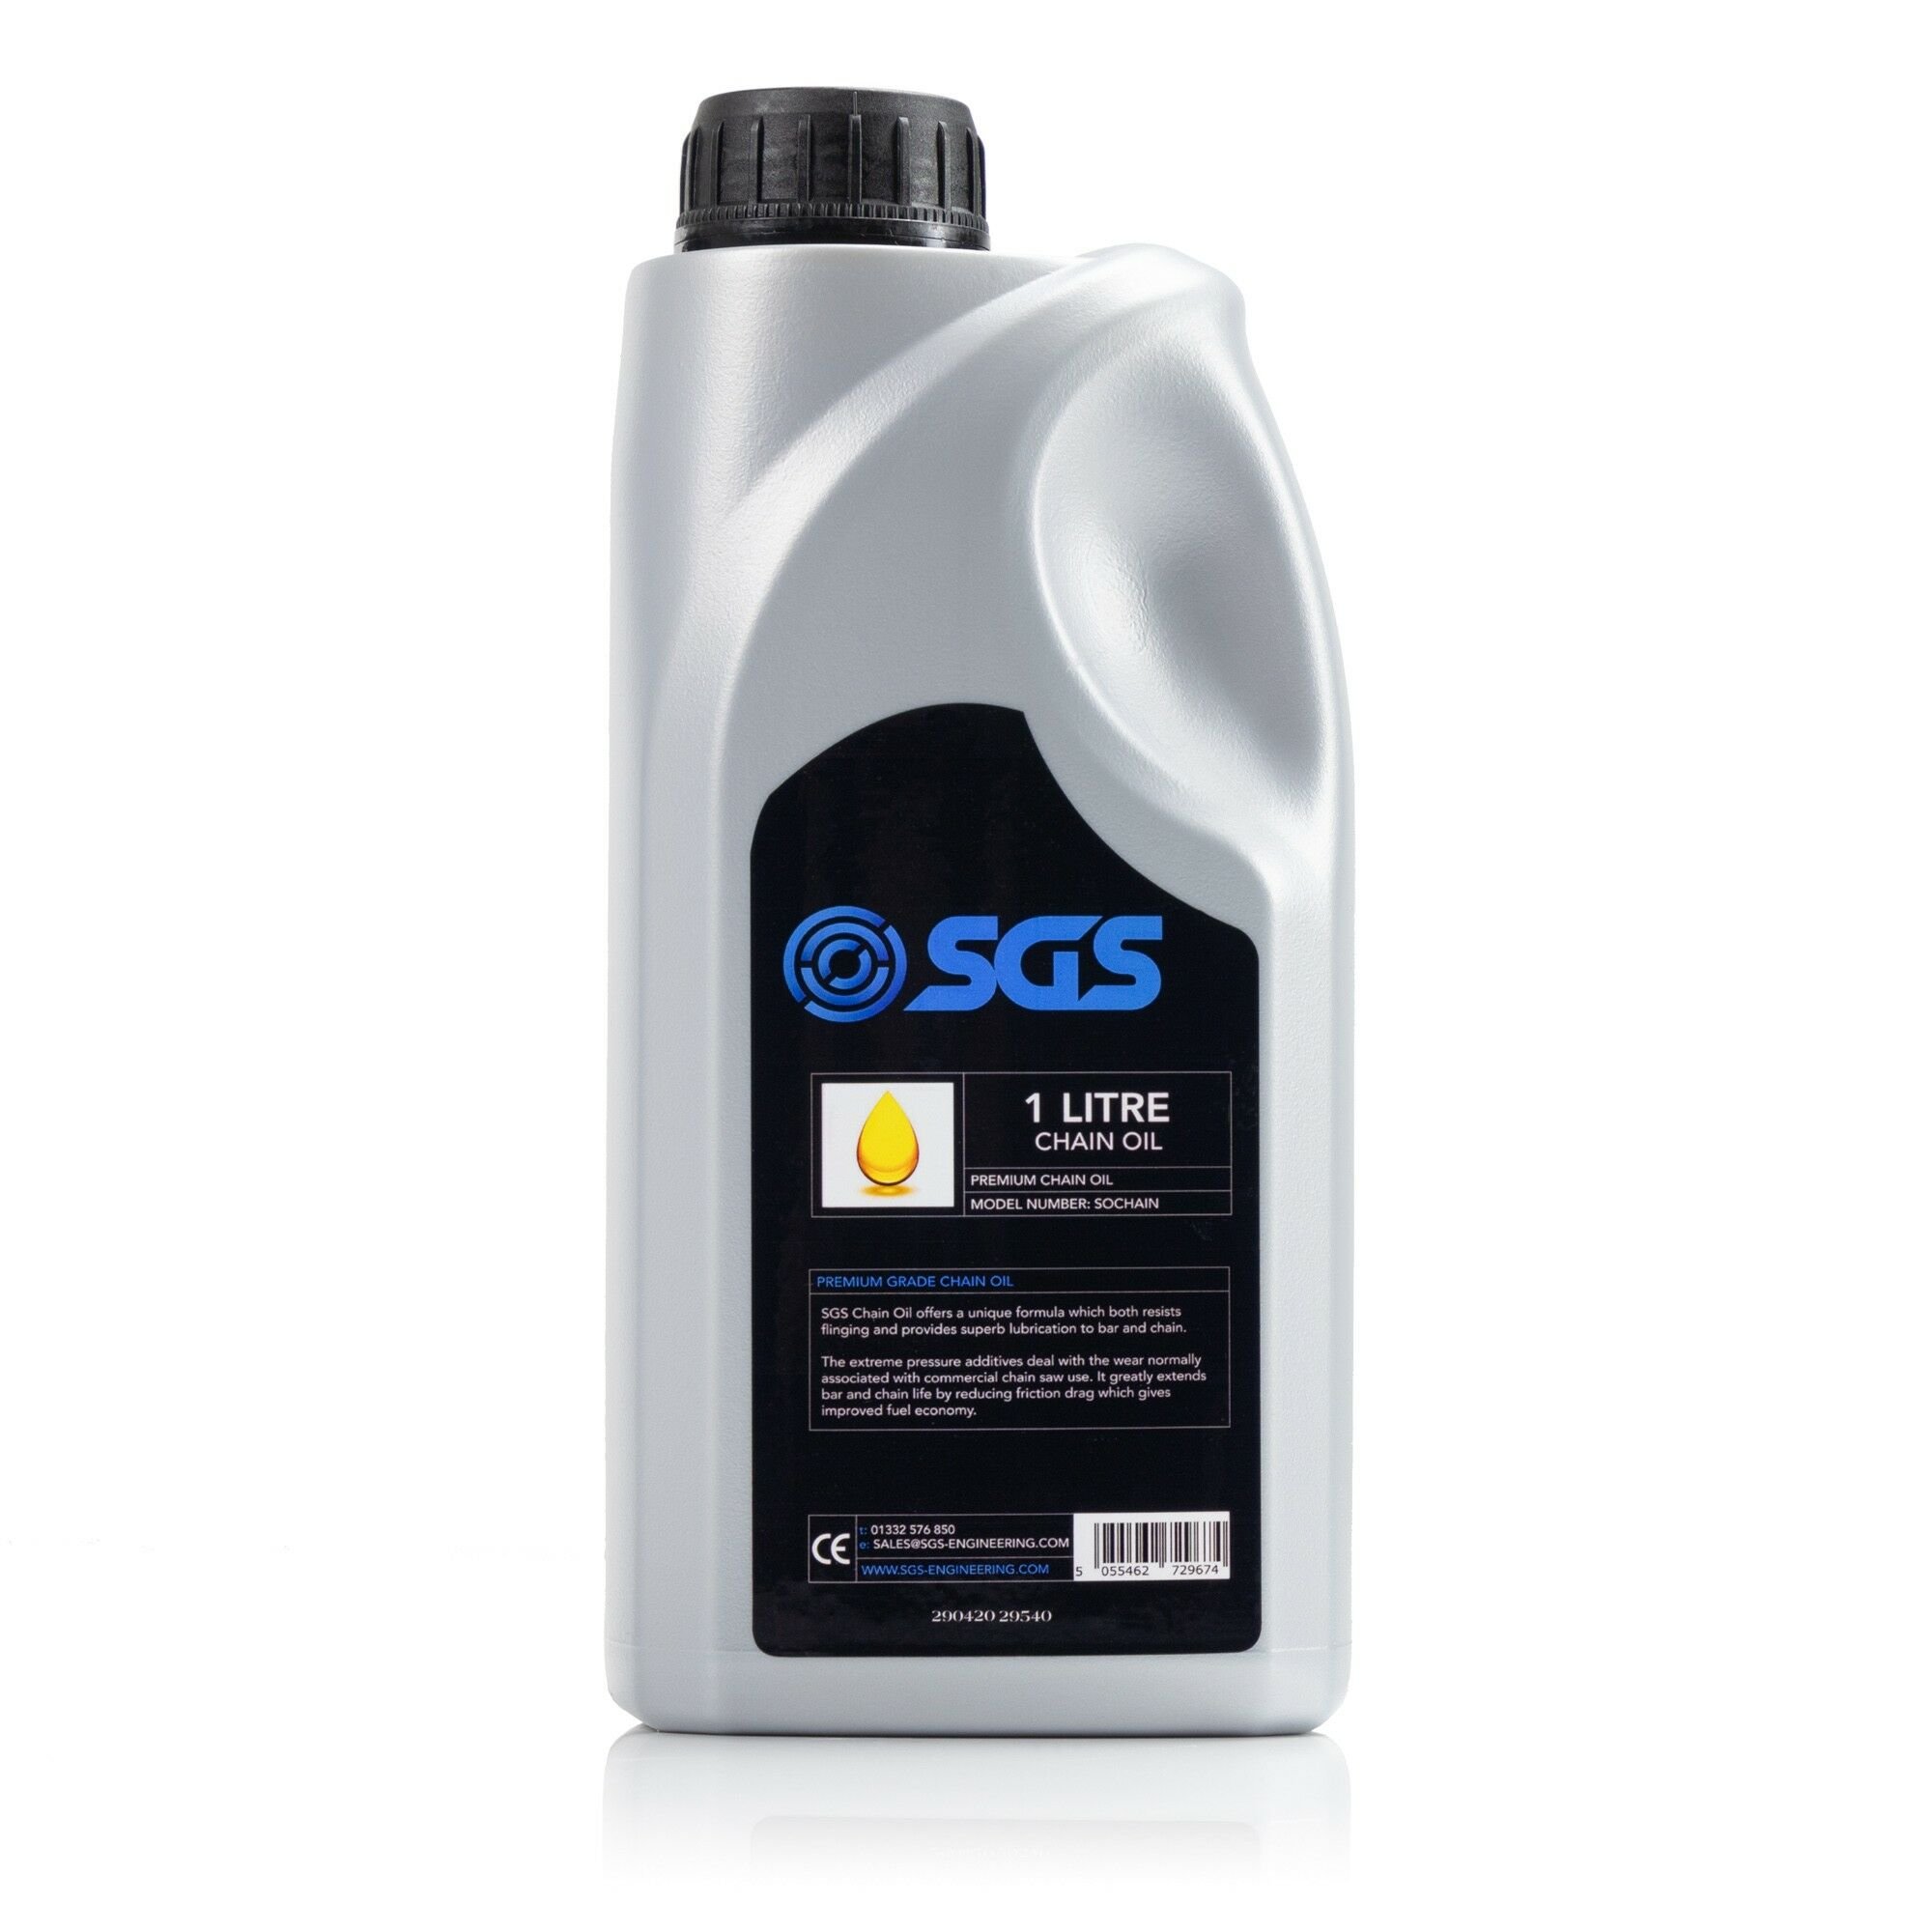 SGS Fling Free Premium Chain Oil For Chainsaws - 1 Litre